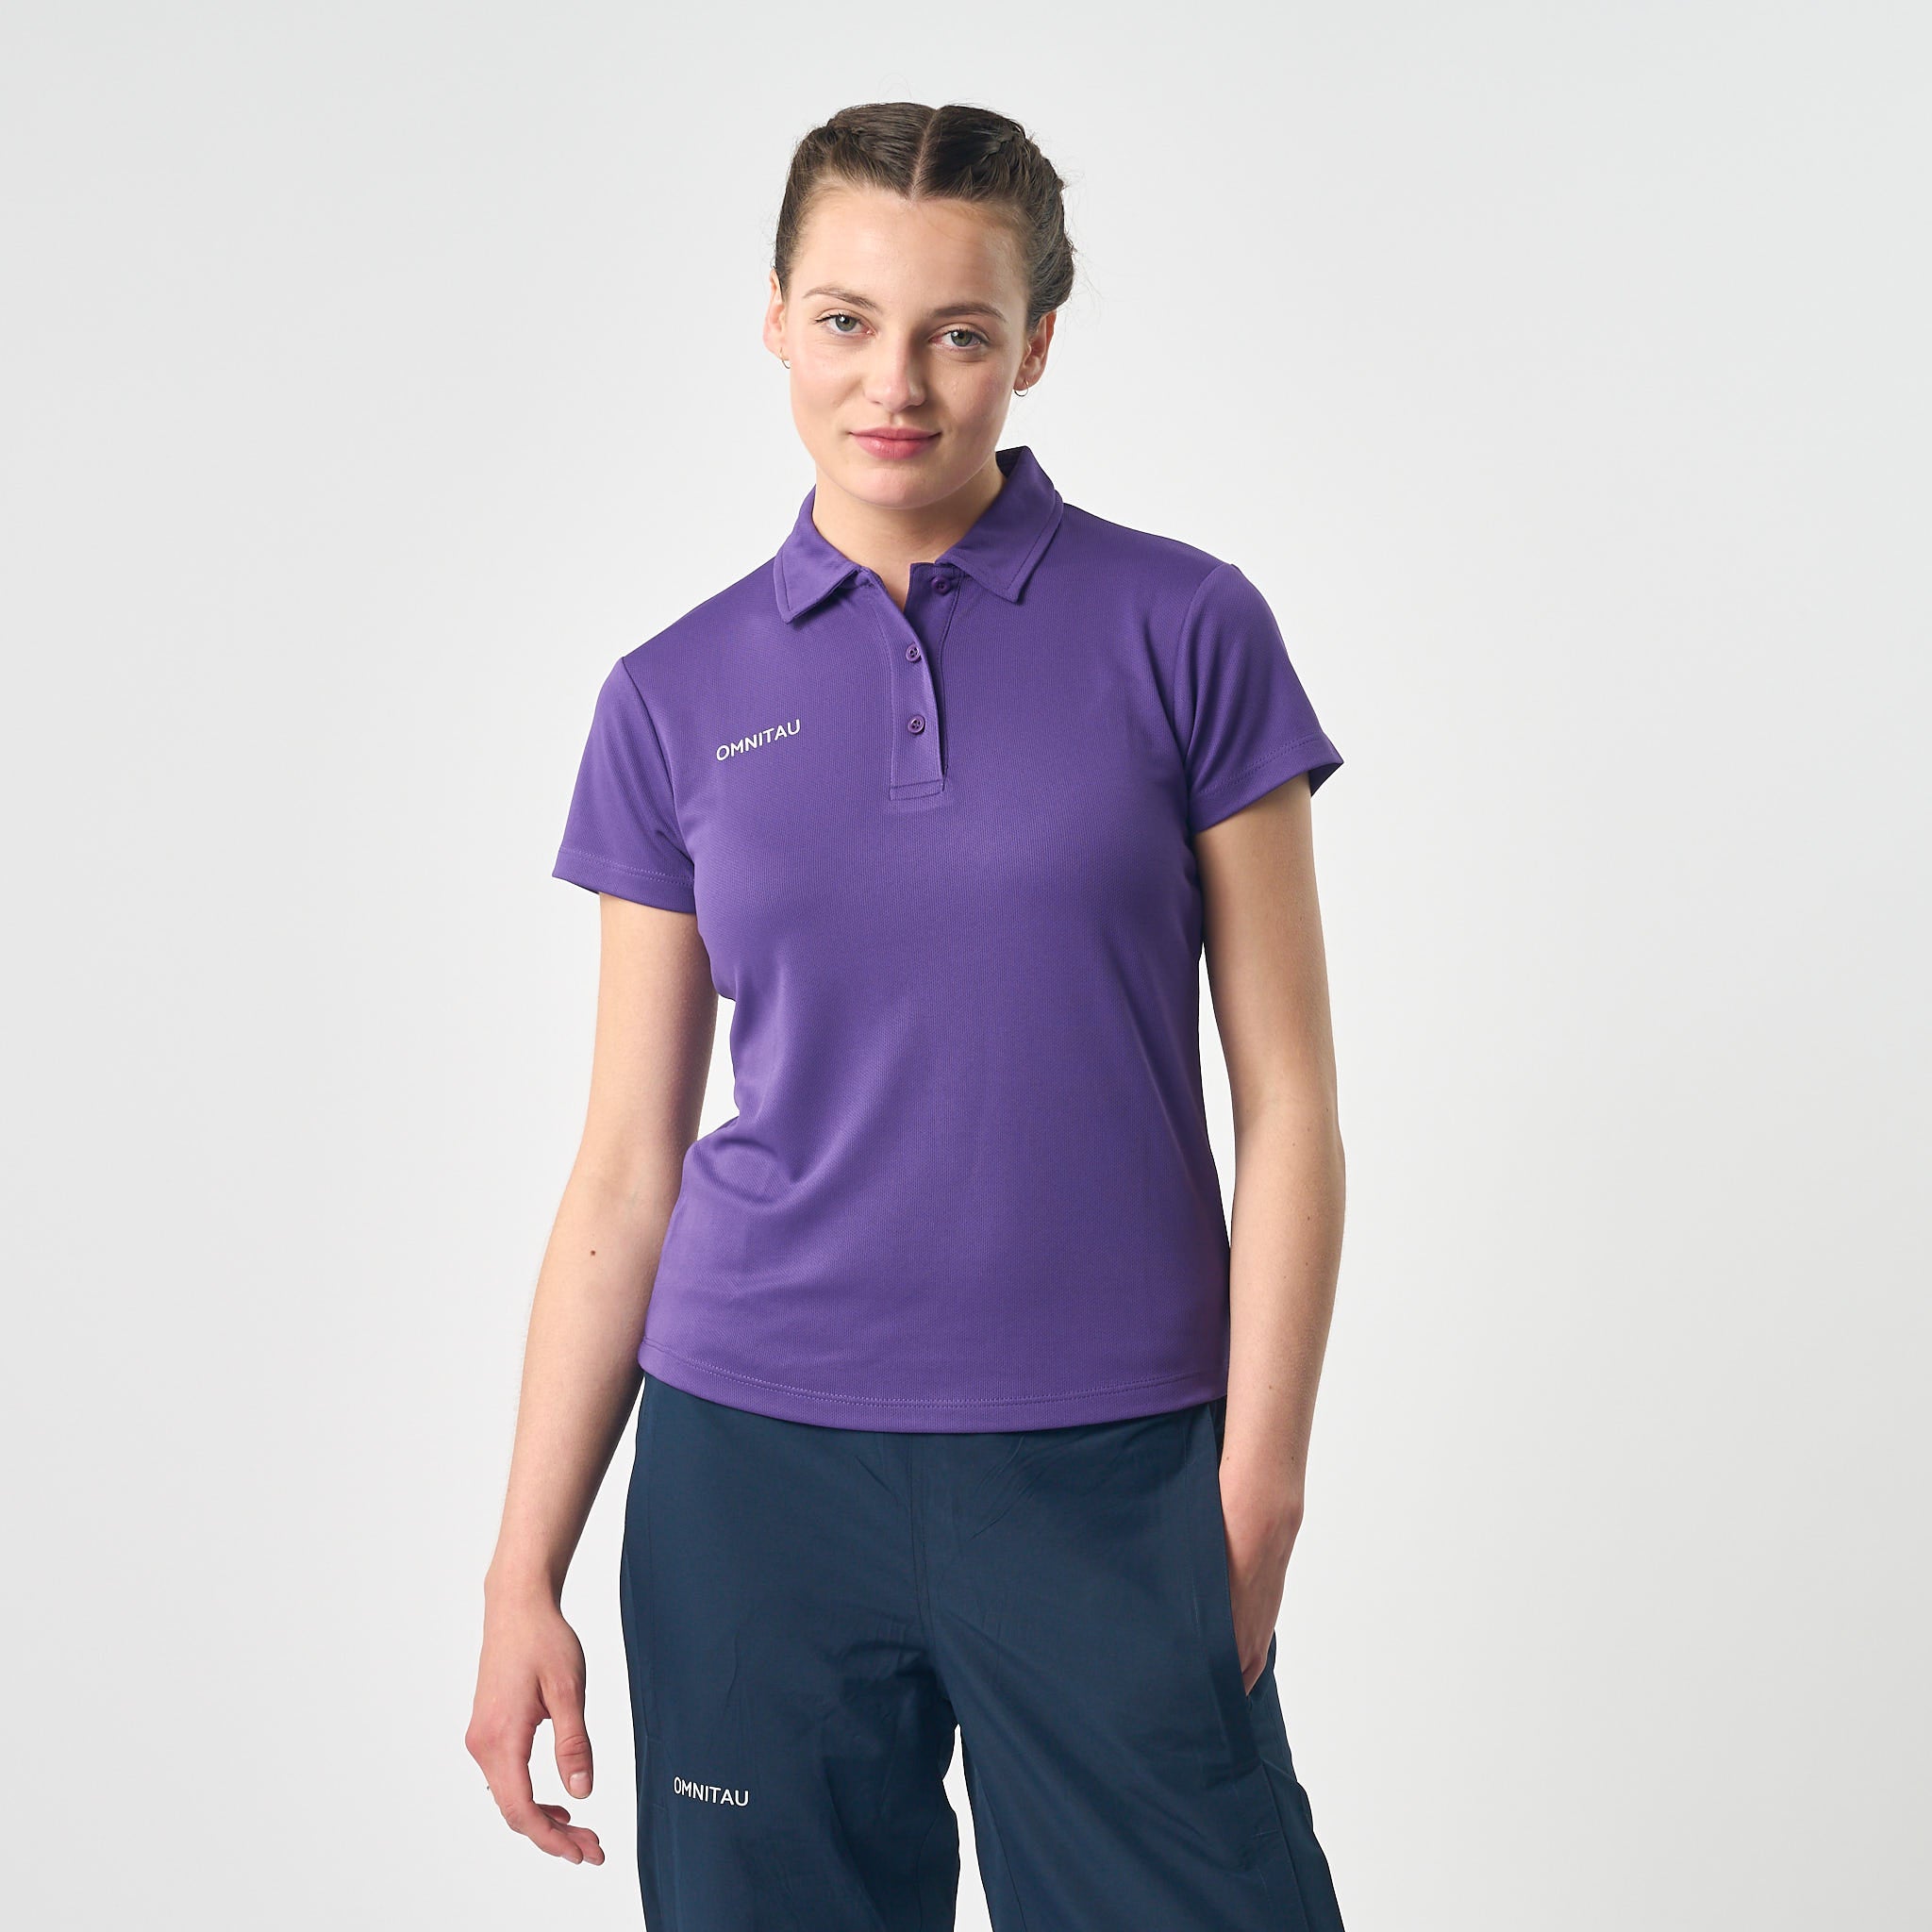 Omnitau Women's Team Sports Breathable Technical Polo - Purple